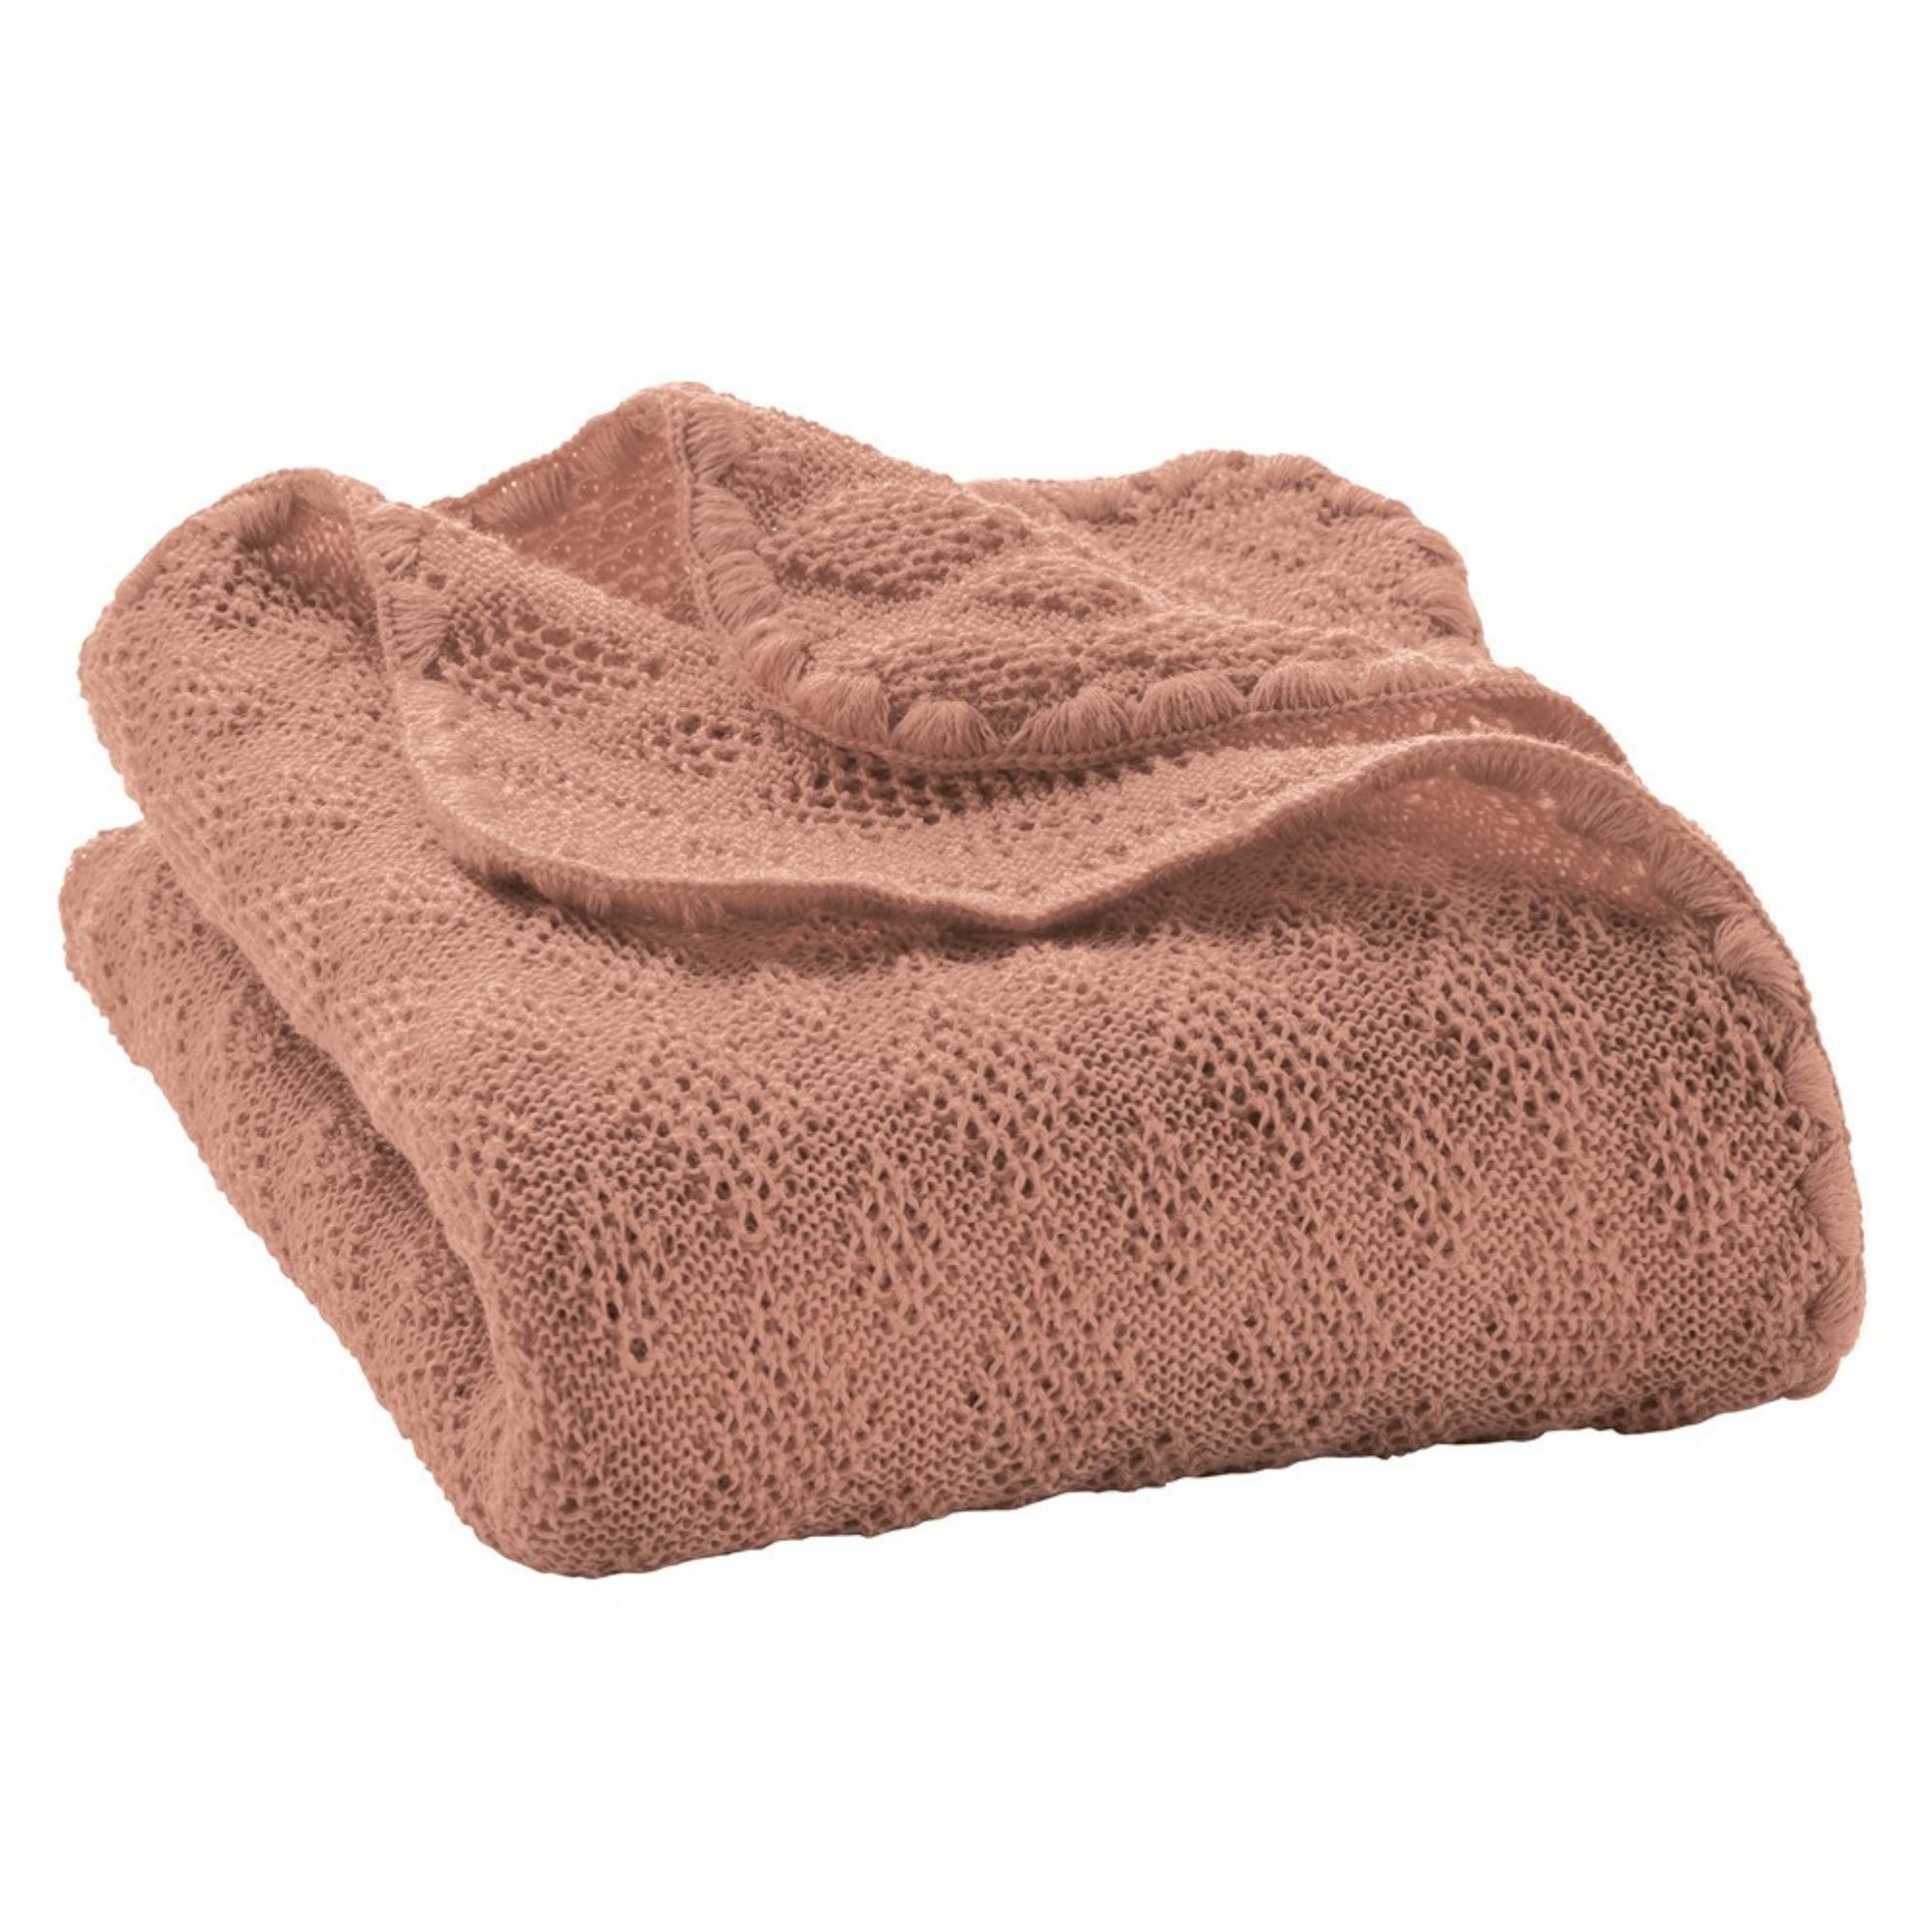 DISANA - Couverture tricotée - Laine mérinos - ROSE - ORIGINALE